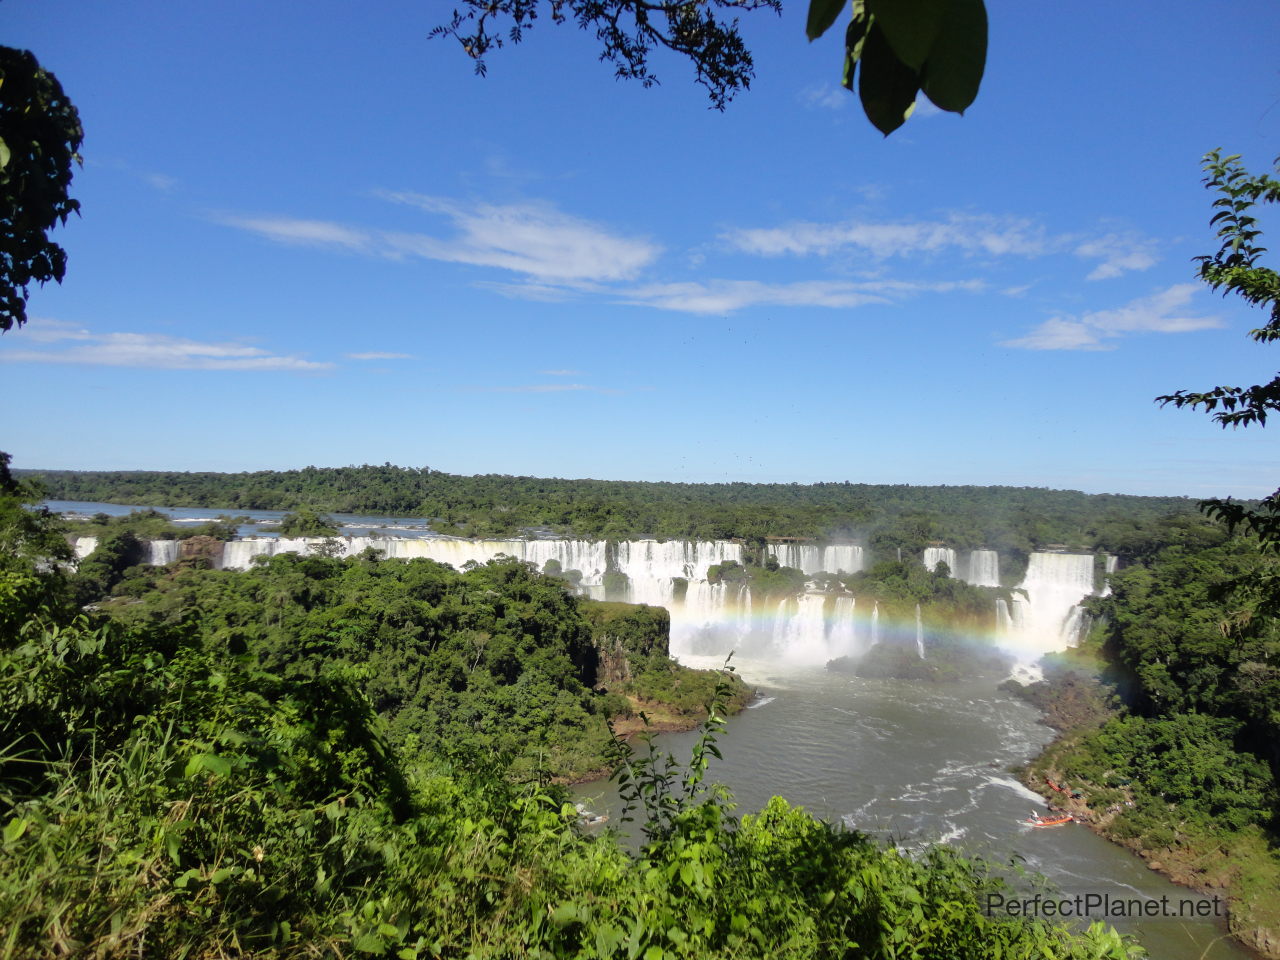 Cataratas de Iguazu